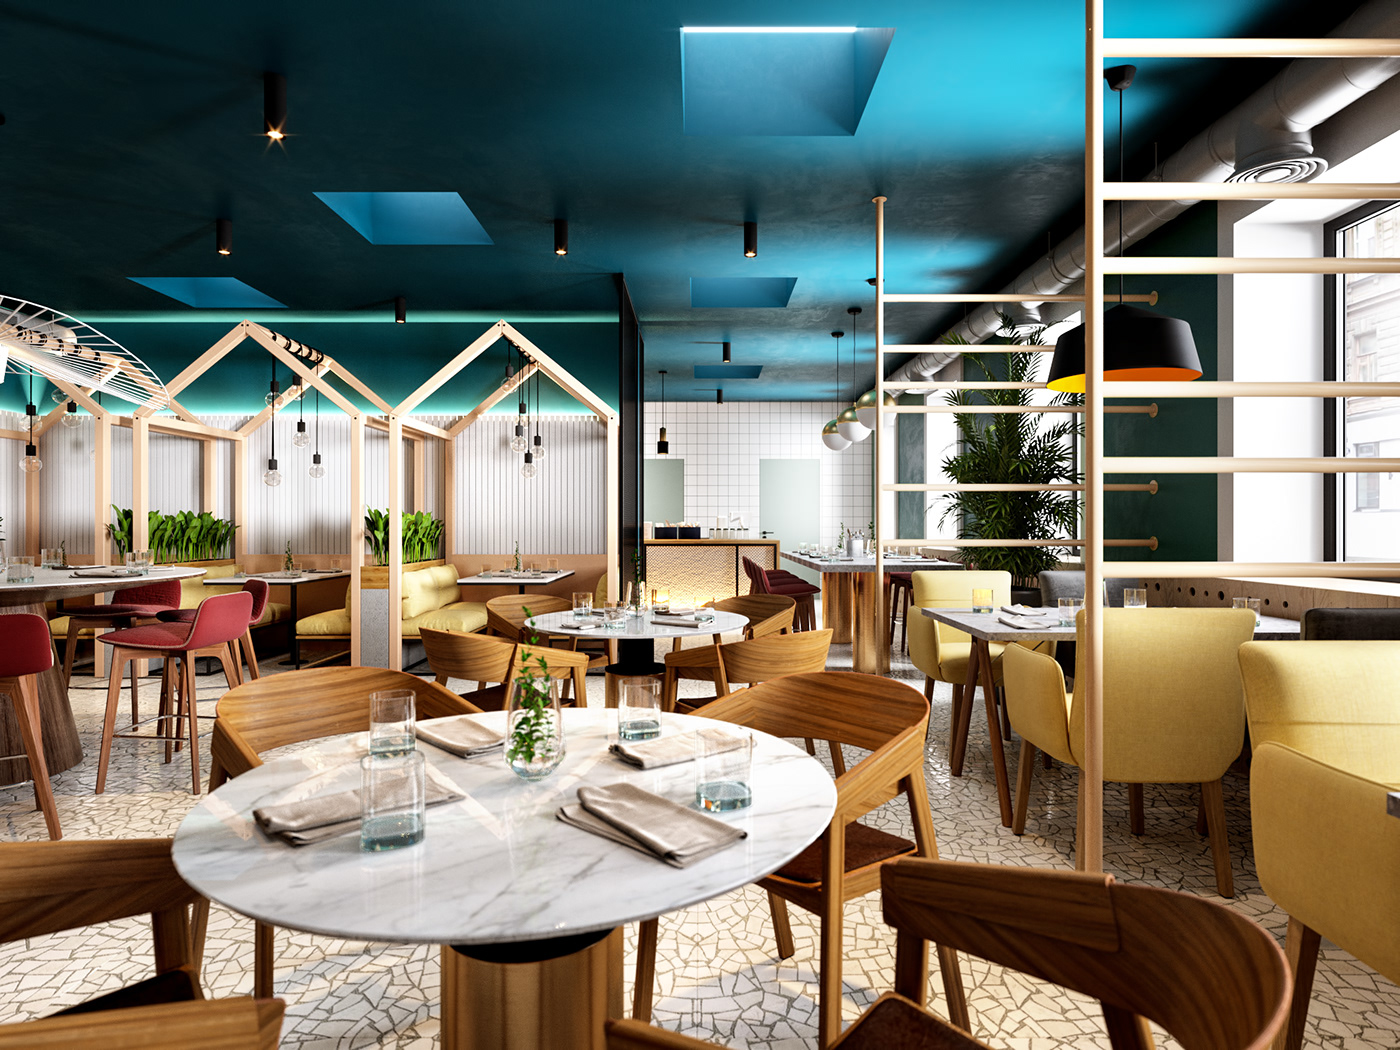 Interior design bar cafe restaurant